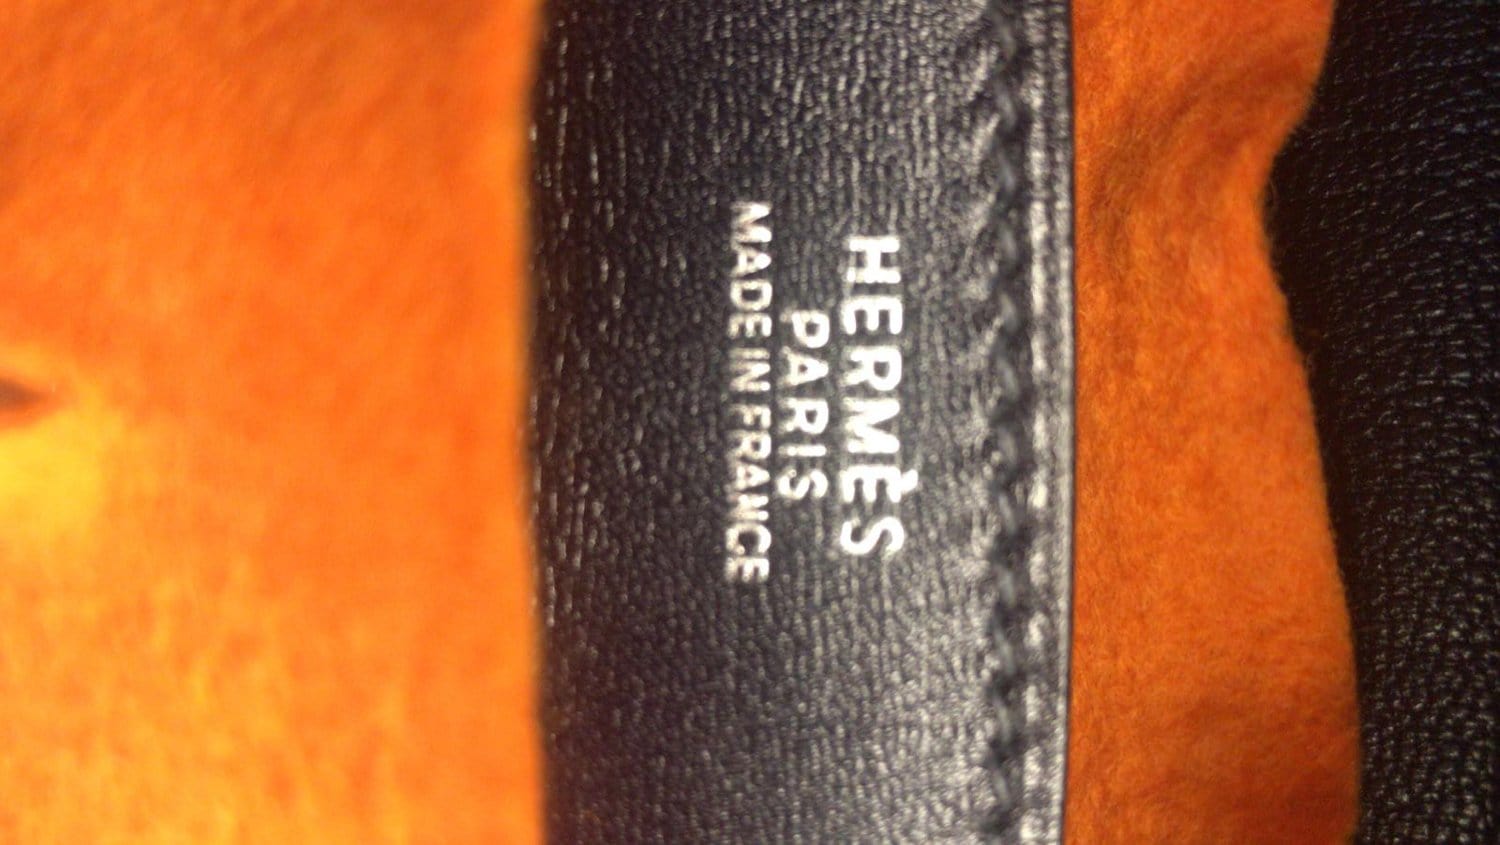 Super rare Hermes birkin 30cm metallic sliver chèvre leather Phw  #hermesbirkinmetallic #hermesmetallic #hermesmetallicsilver #glossvintage